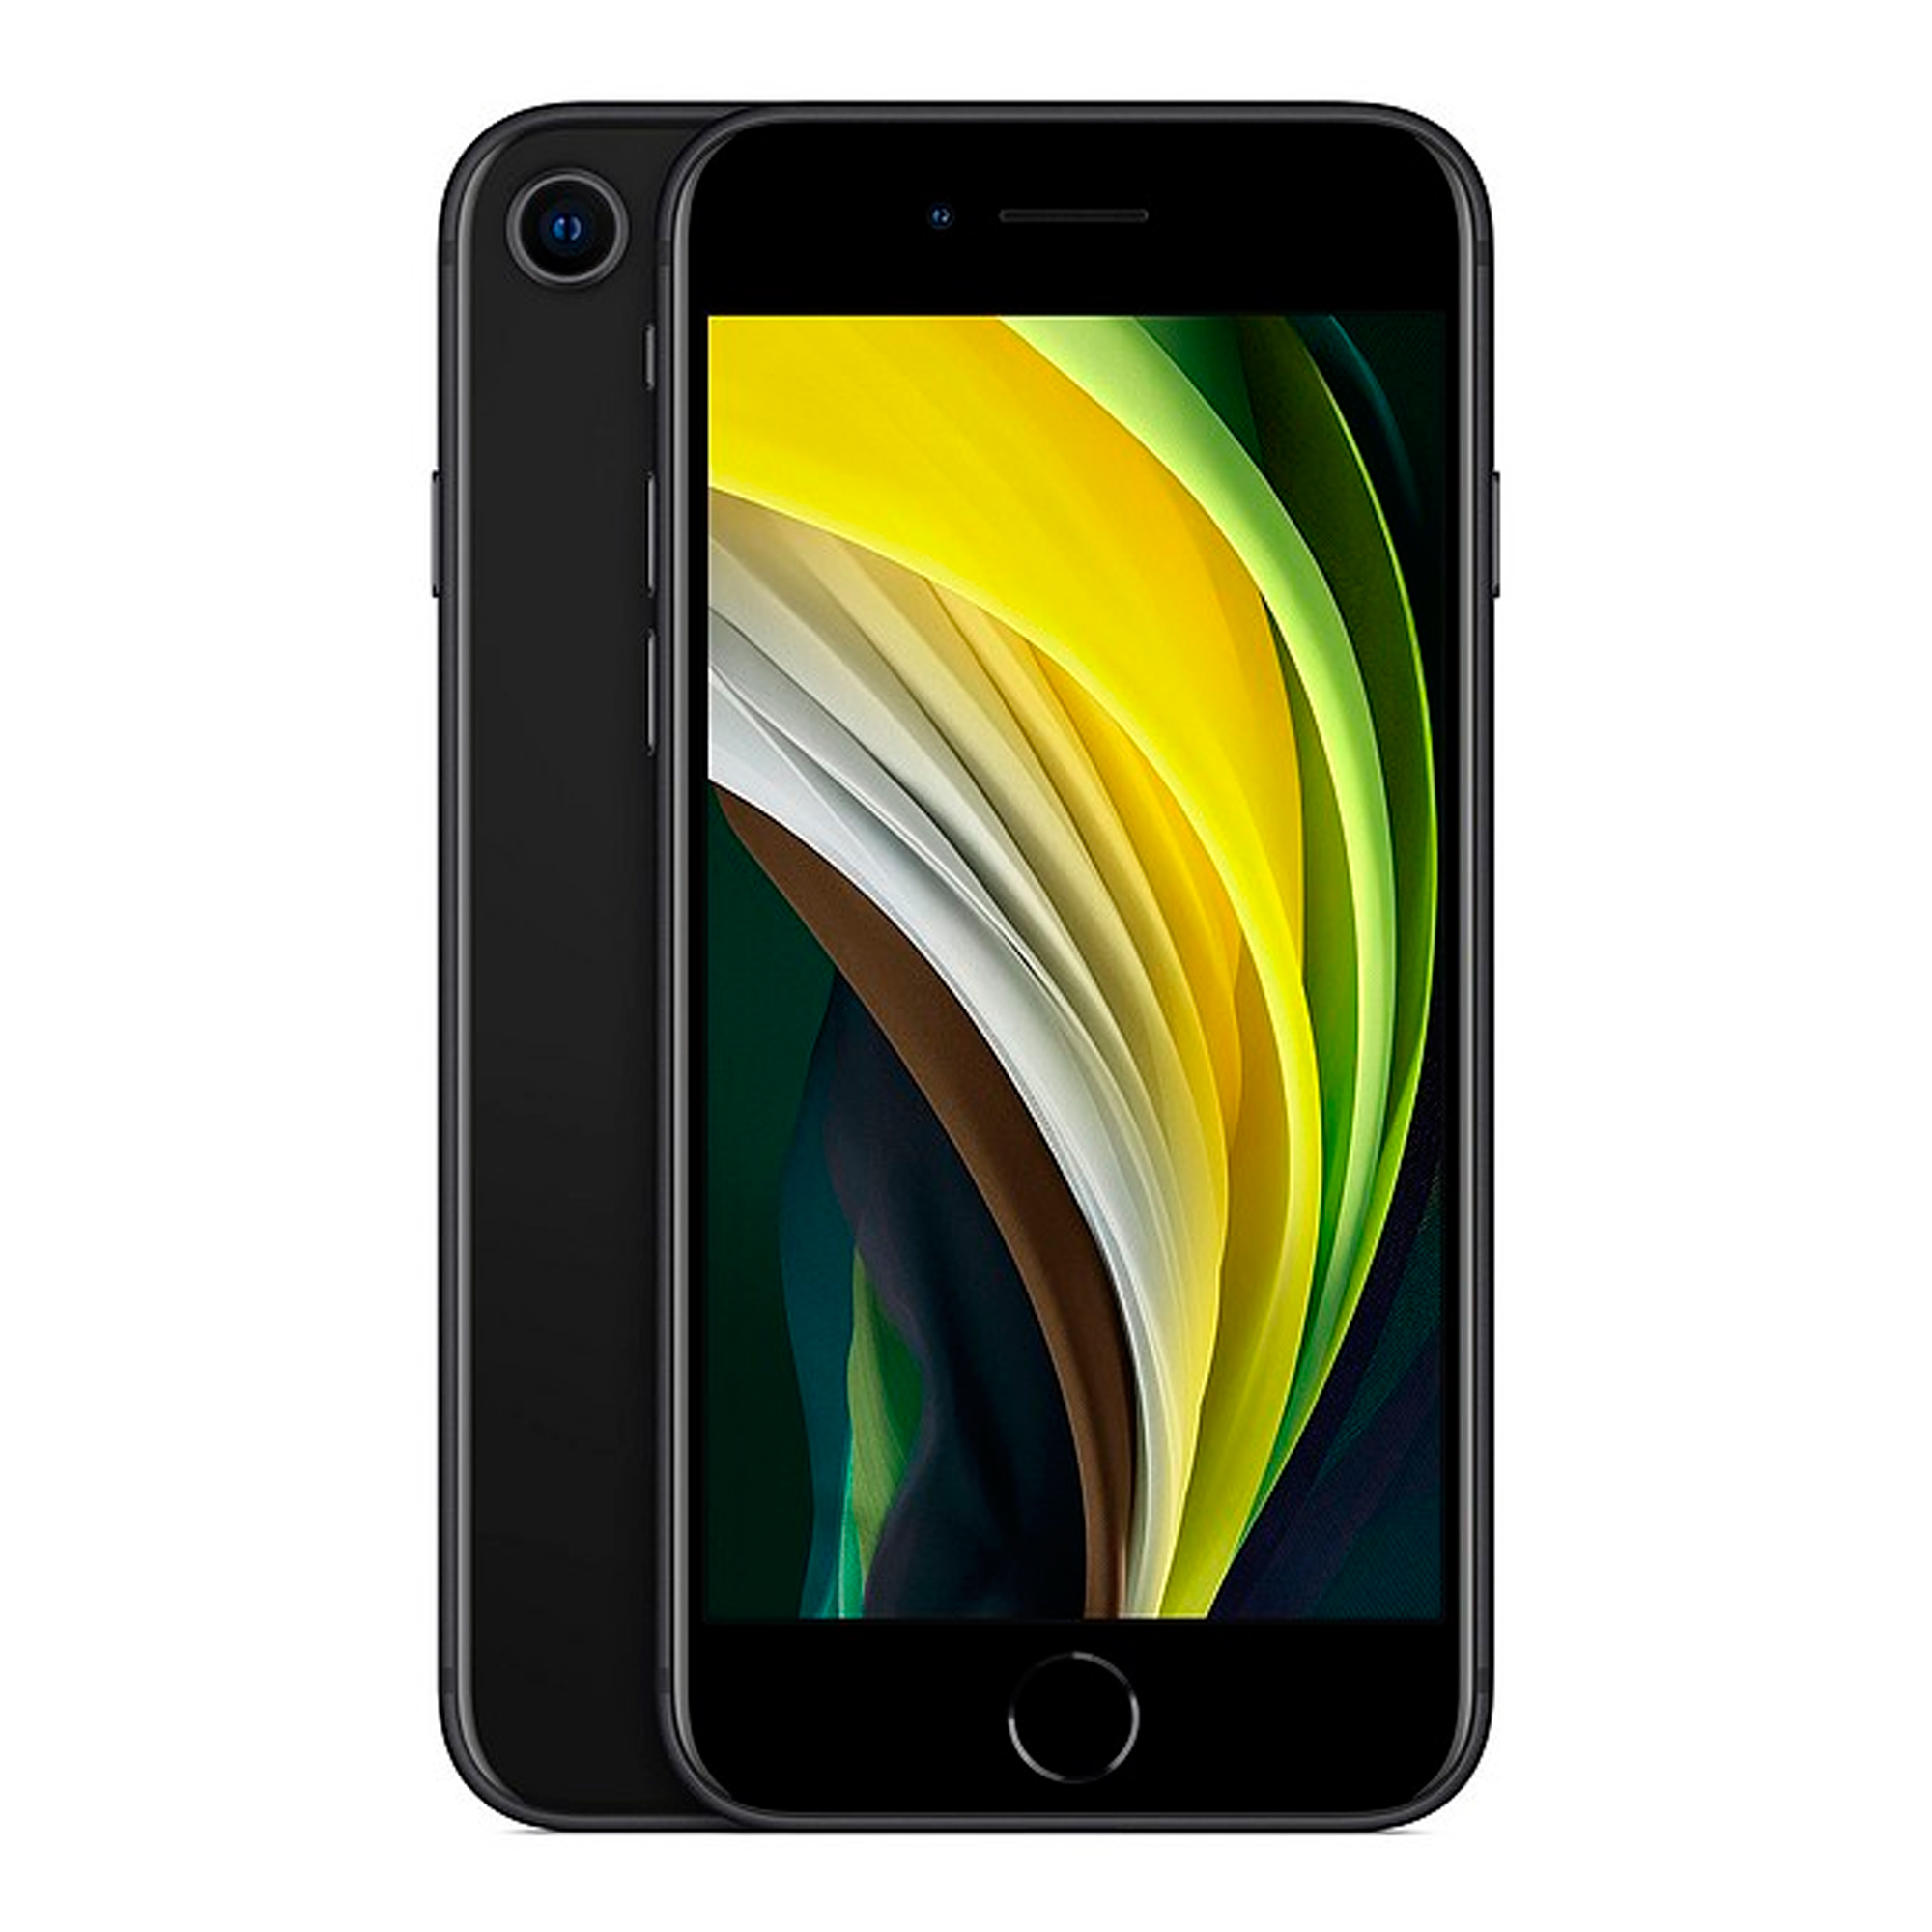 Cel iPhone SE(2020) 3gb/64gb Ref AA